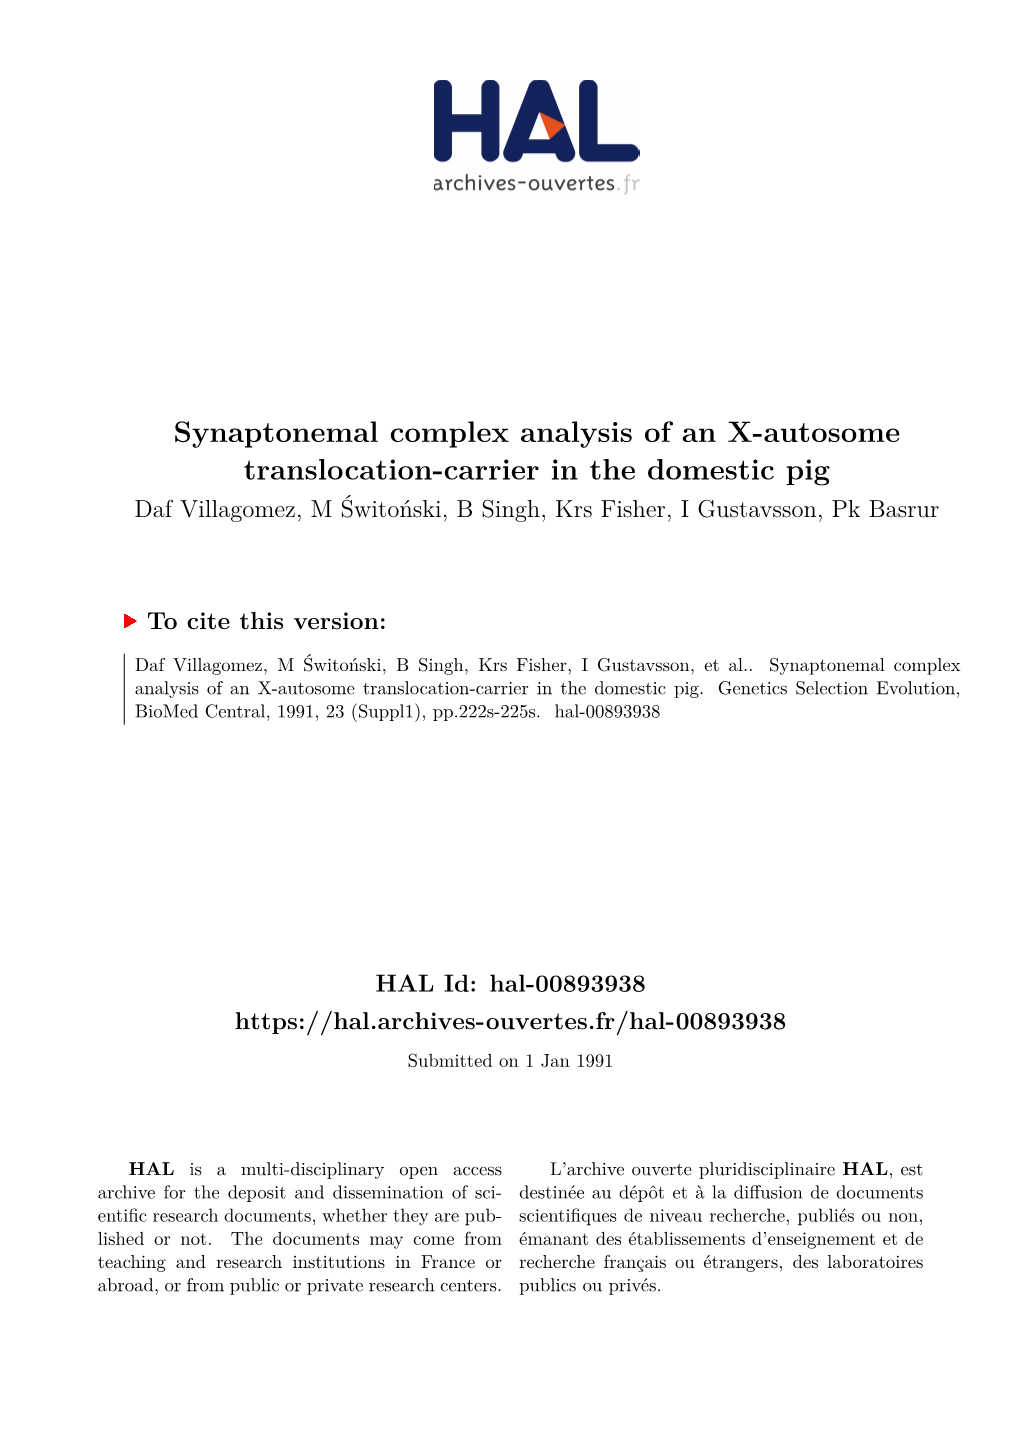 Synaptonemal Complex Analysis of an X-Autosome Translocation-Carrier in the Domestic Pig Daf Villagomez, M Świtoński, B Singh, Krs Fisher, I Gustavsson, Pk Basrur